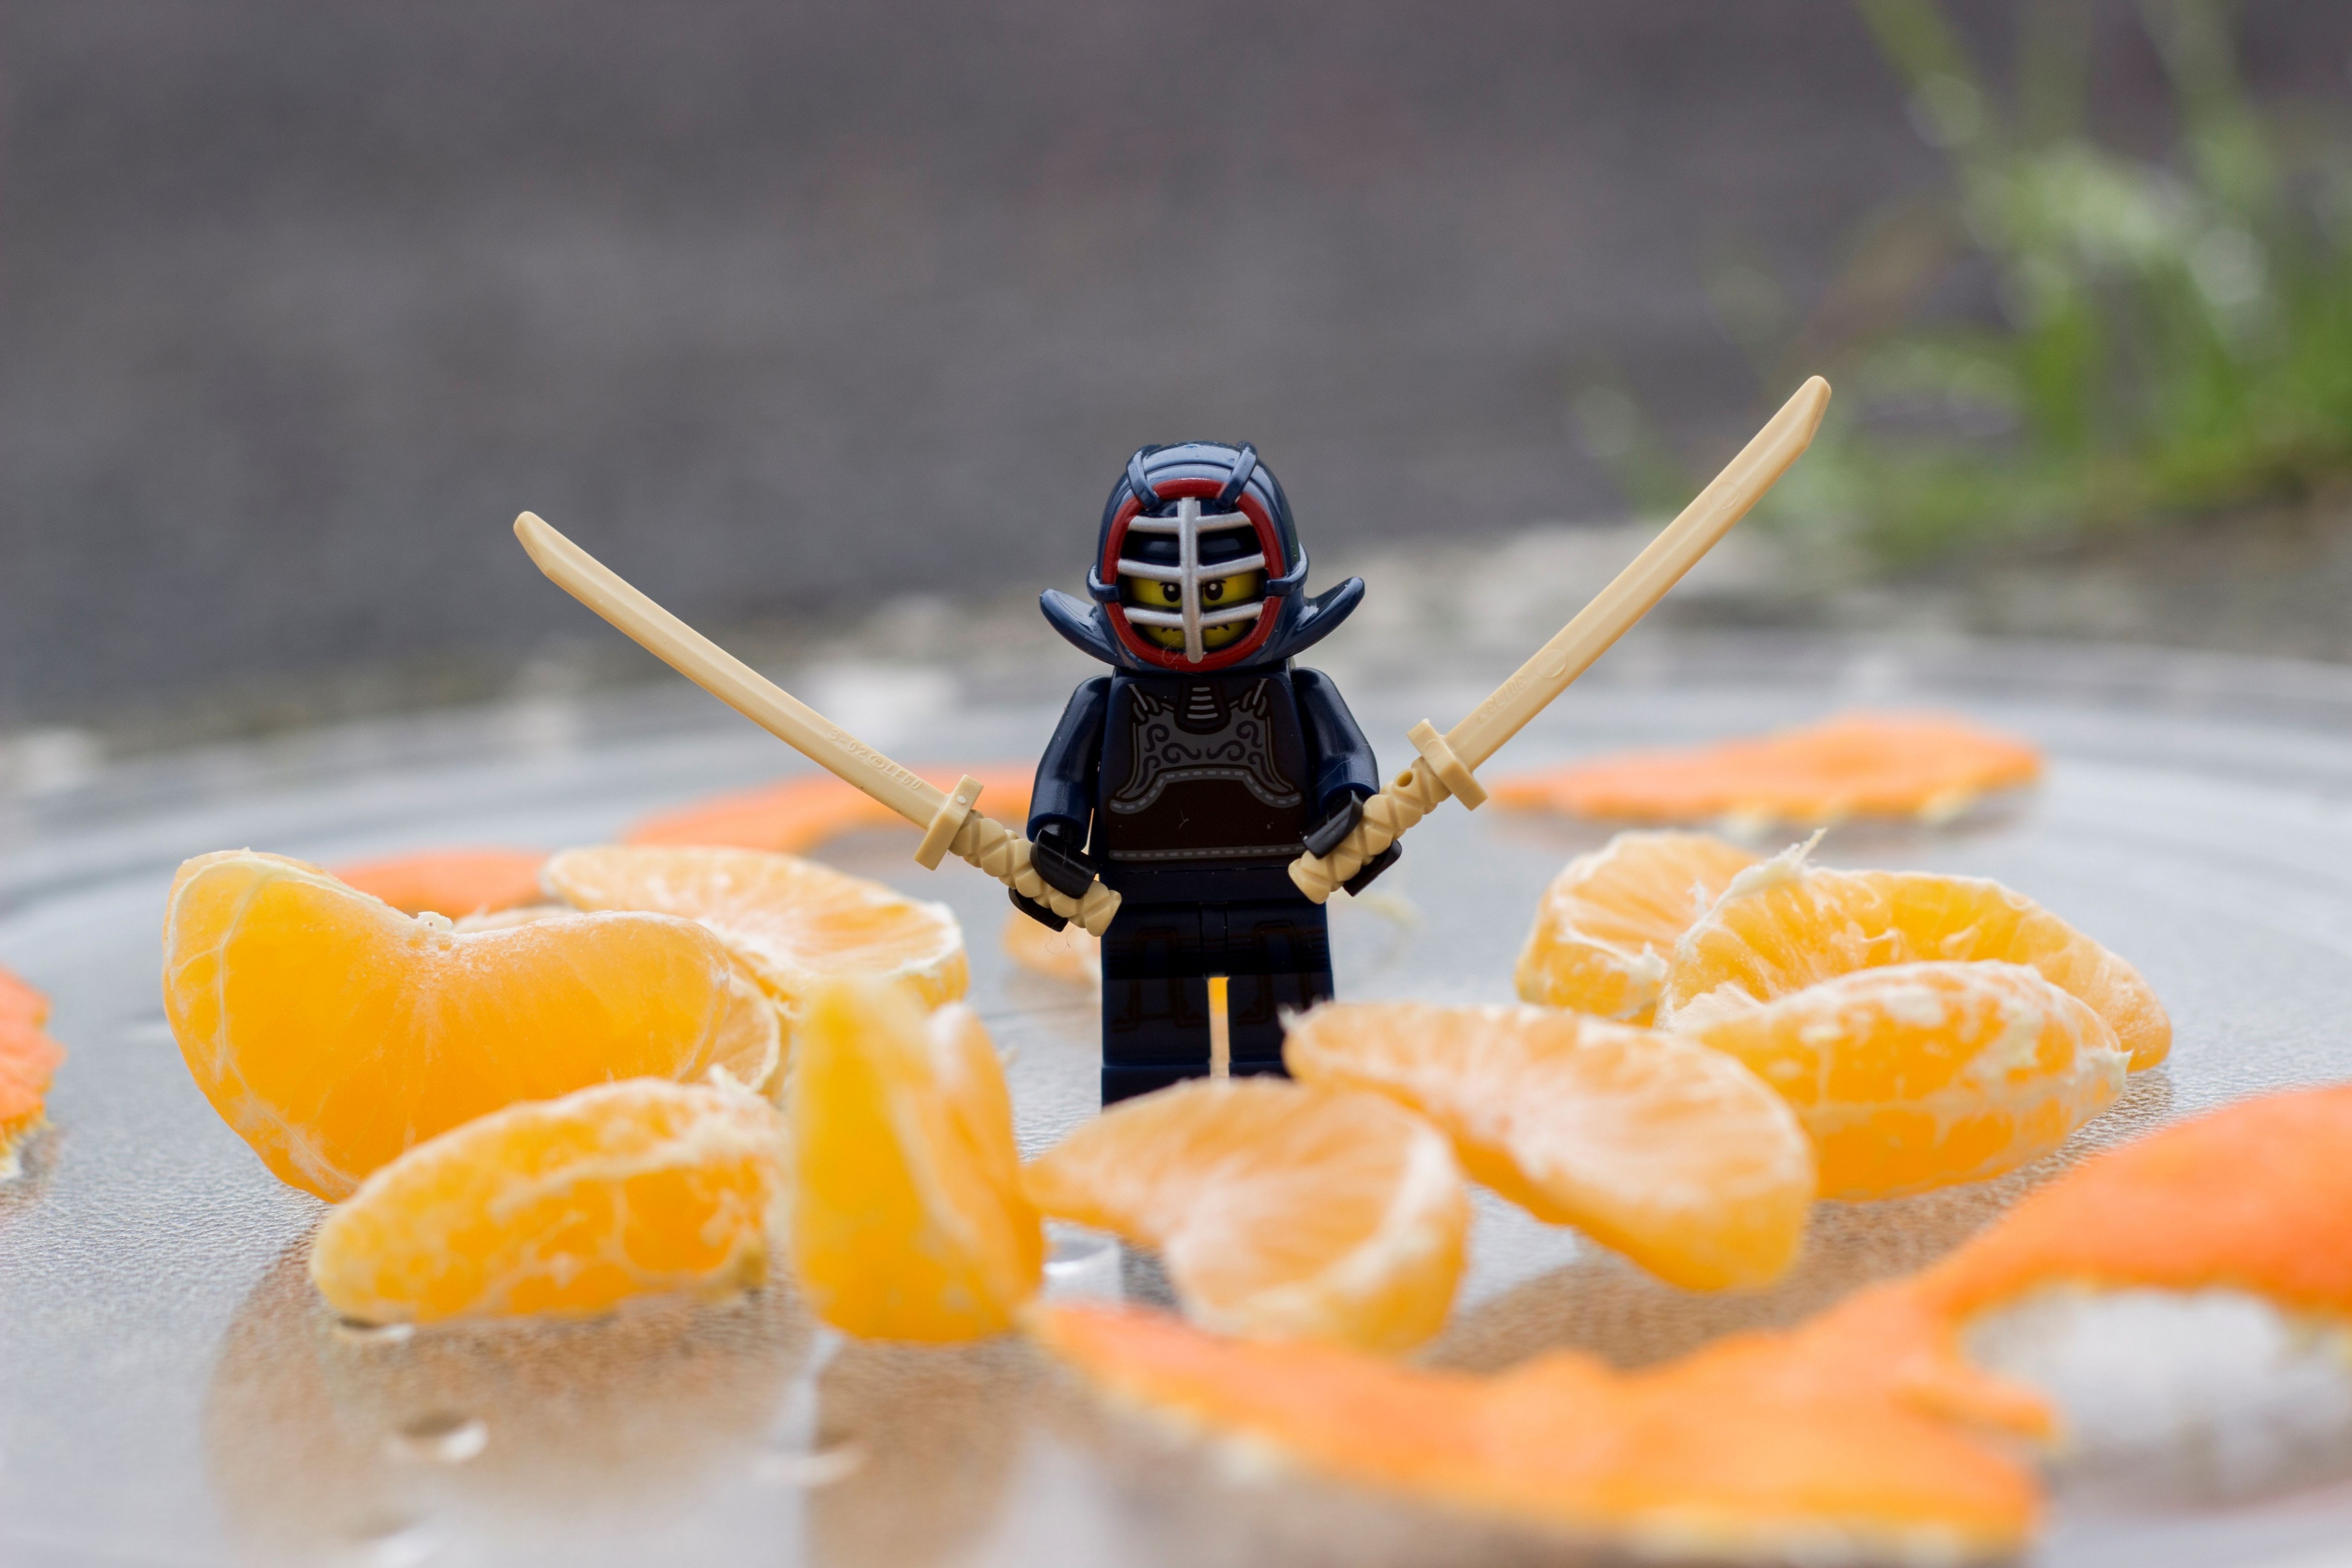 General 5120x3413 LEGO toys closeup miniatures humor photography depth of field ninjas katana fruit tangerine glass figurines